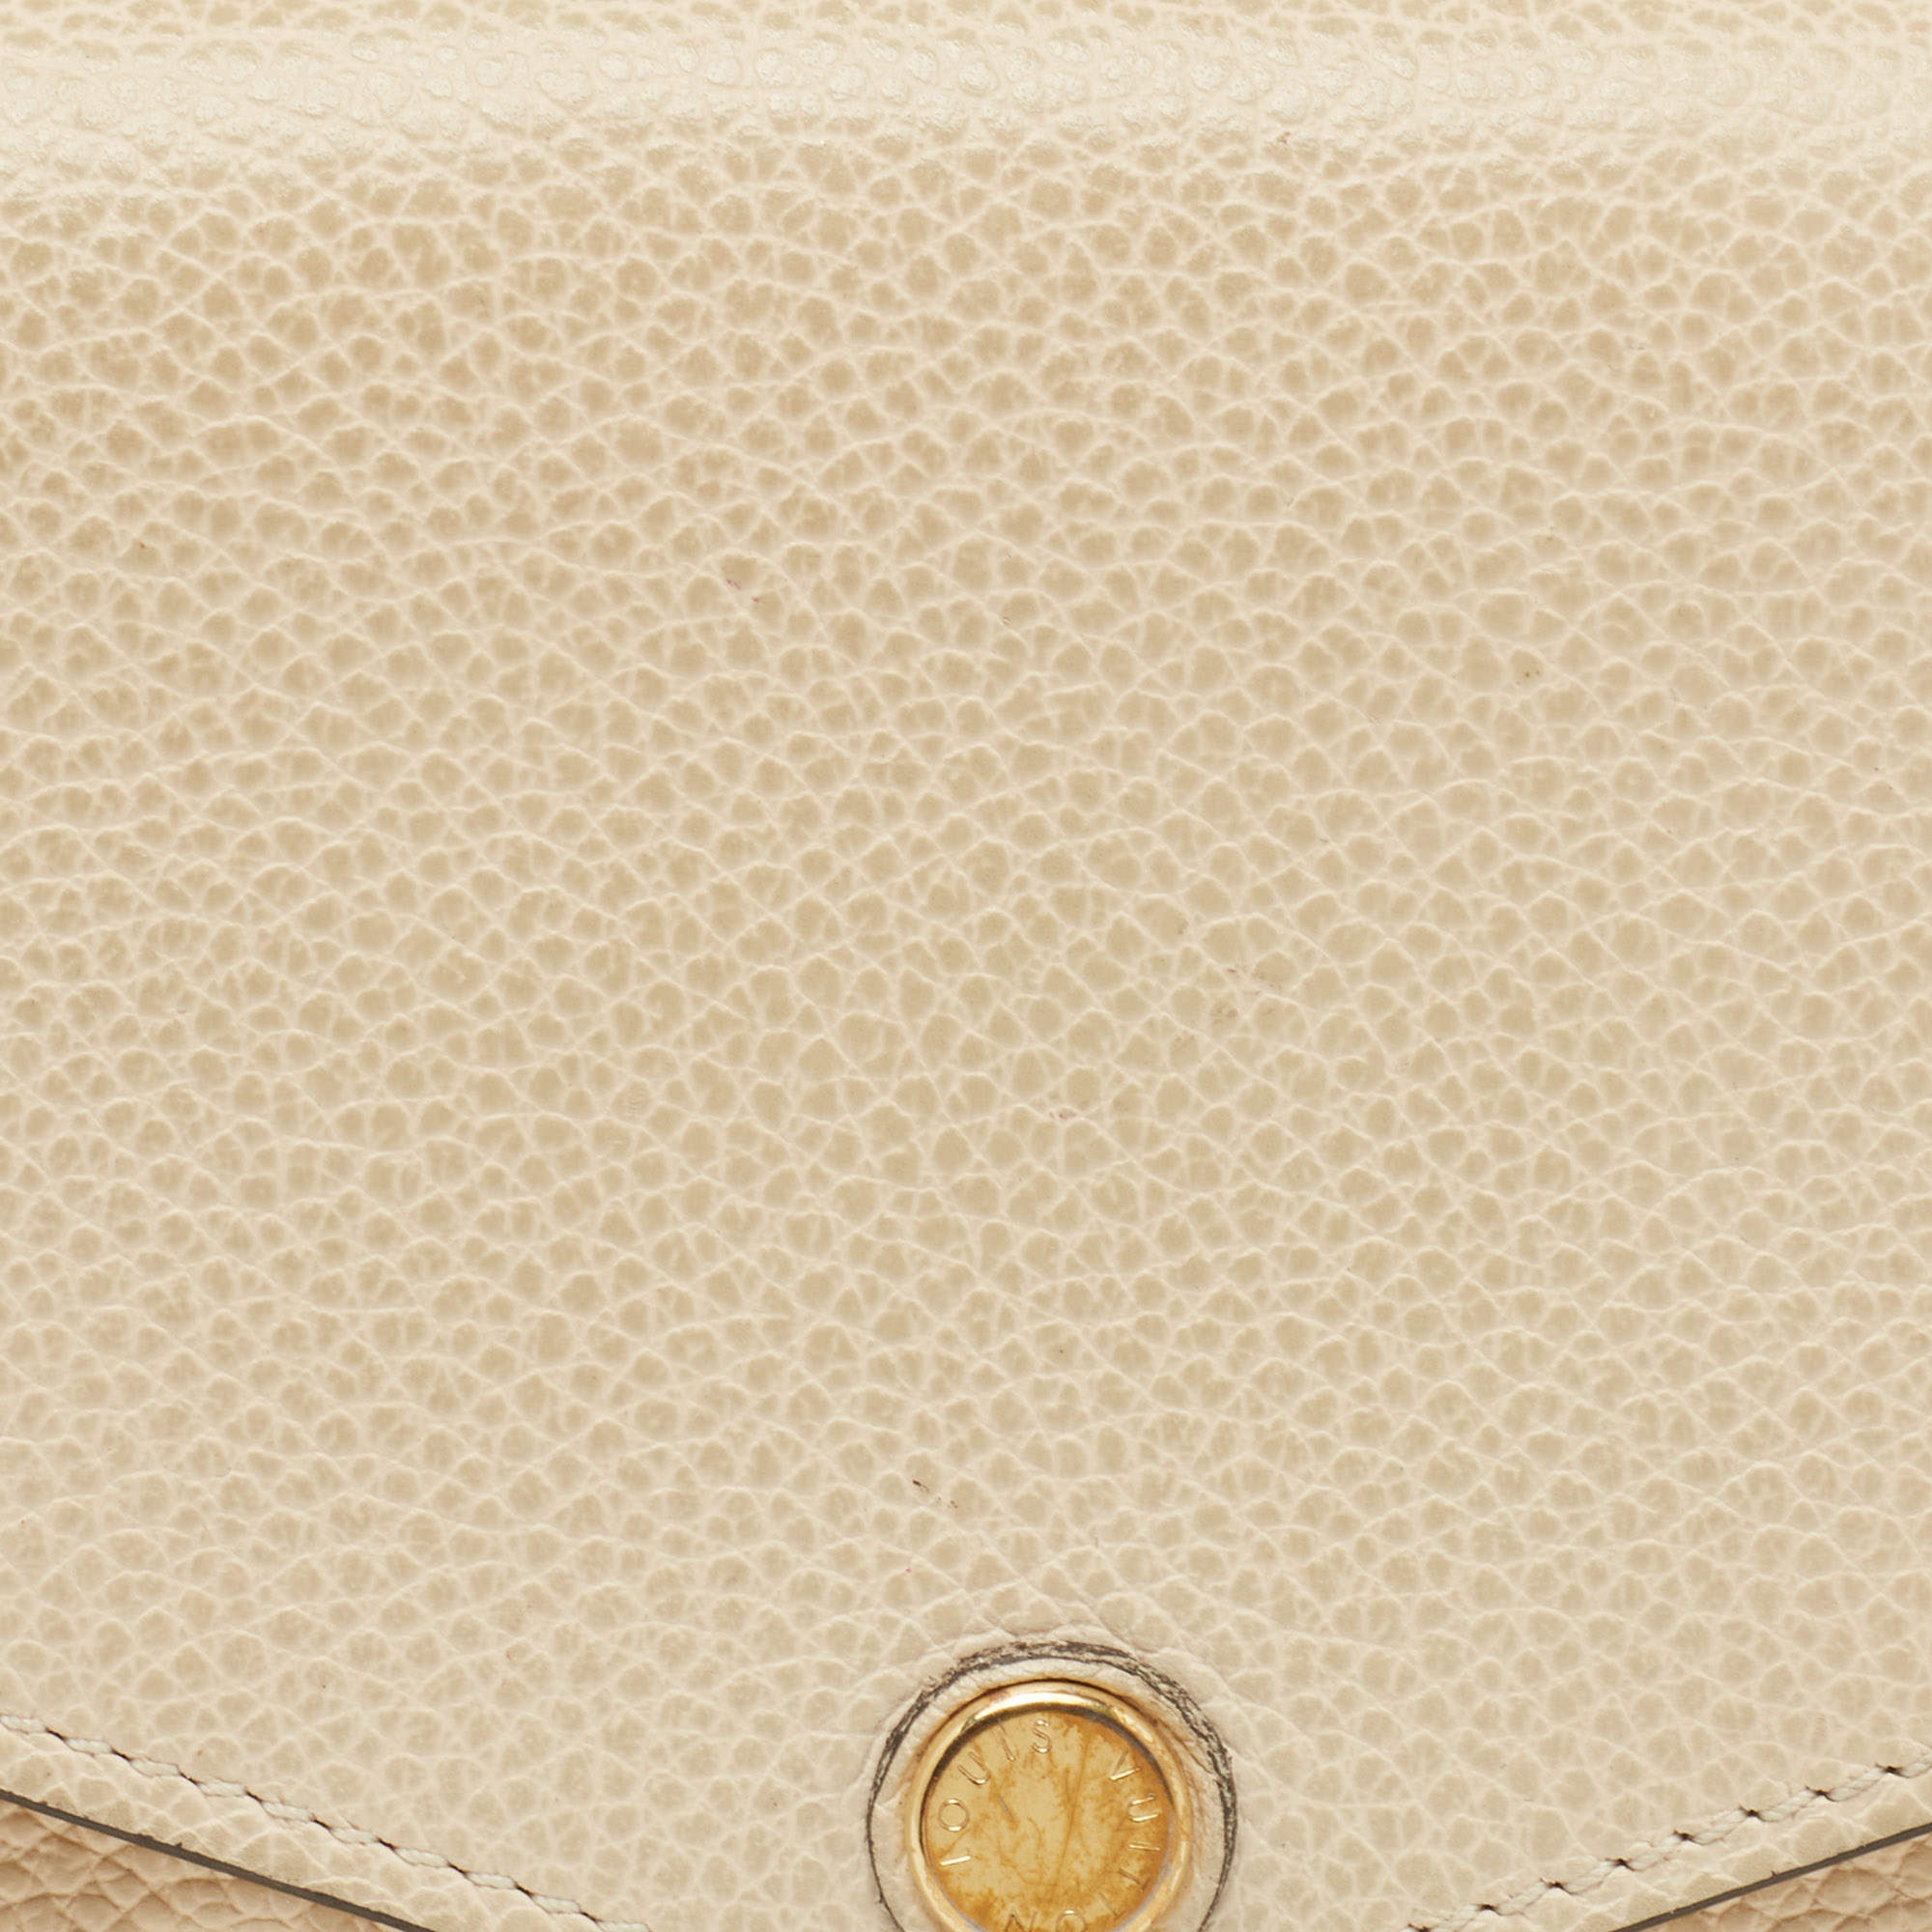 Cloth wallet Louis Vuitton Black in Cloth - 25274279